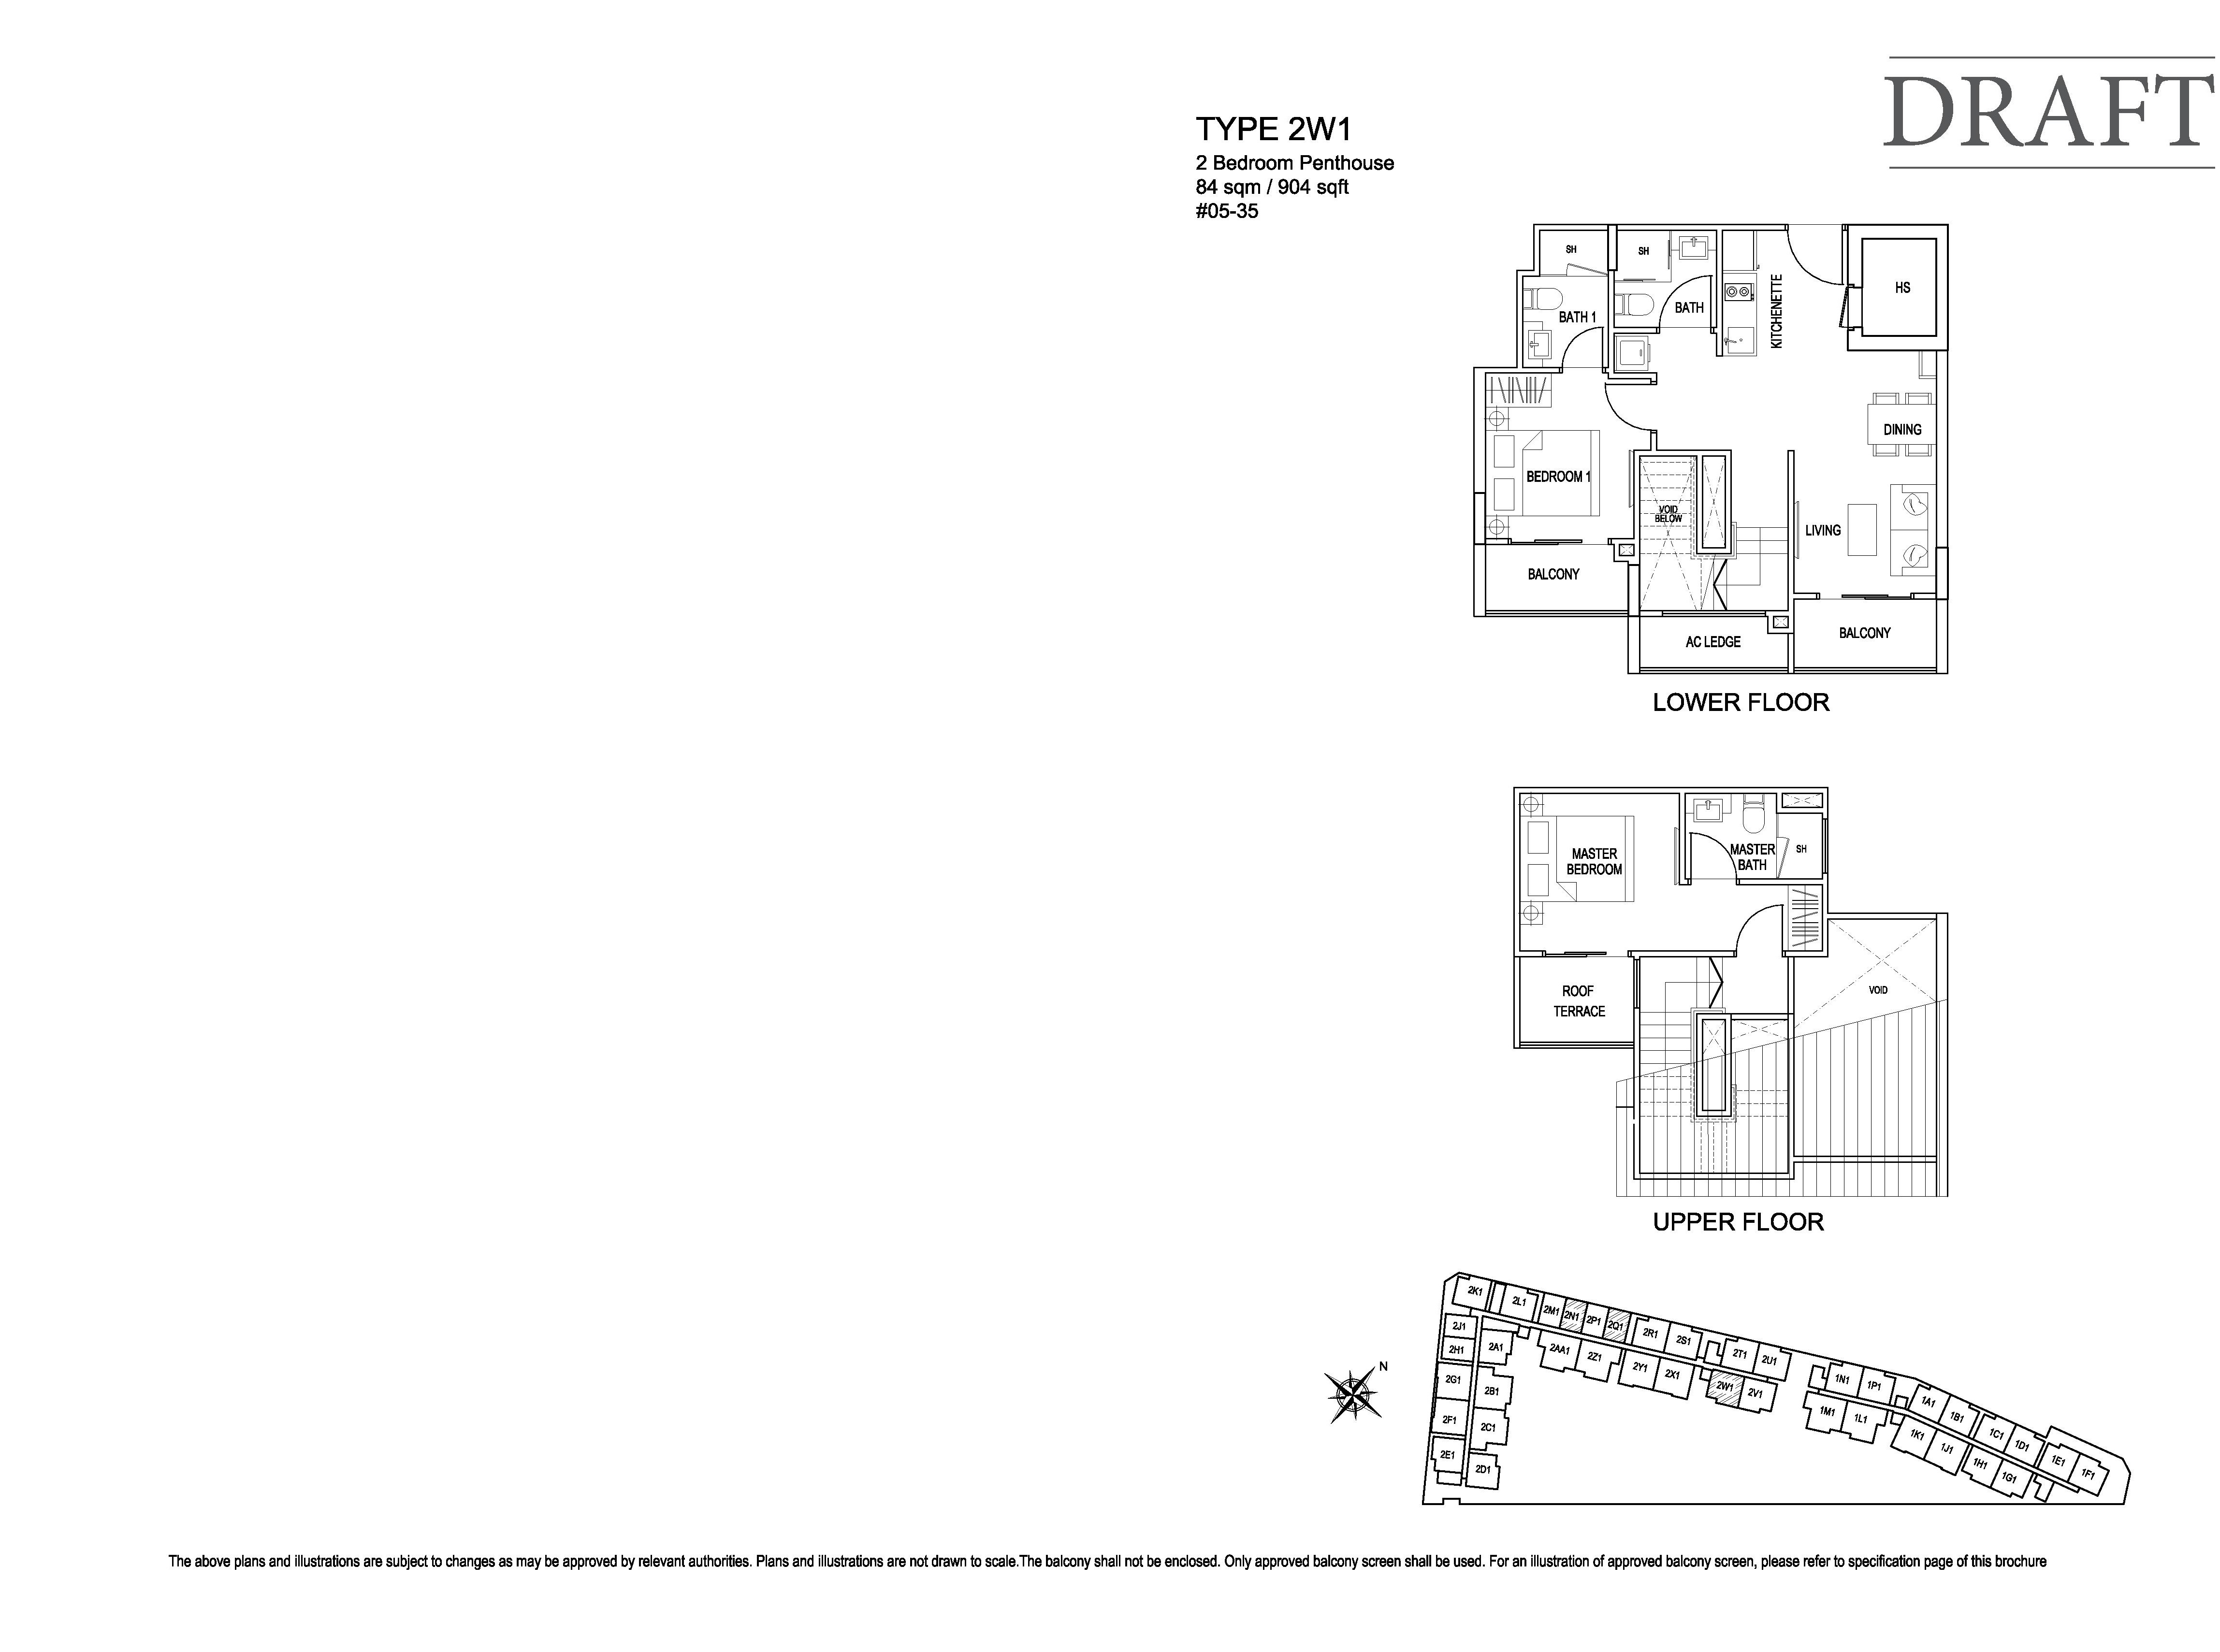 Kensington Square 2 Bedroom Penthouse Floor Plans Type 2W1